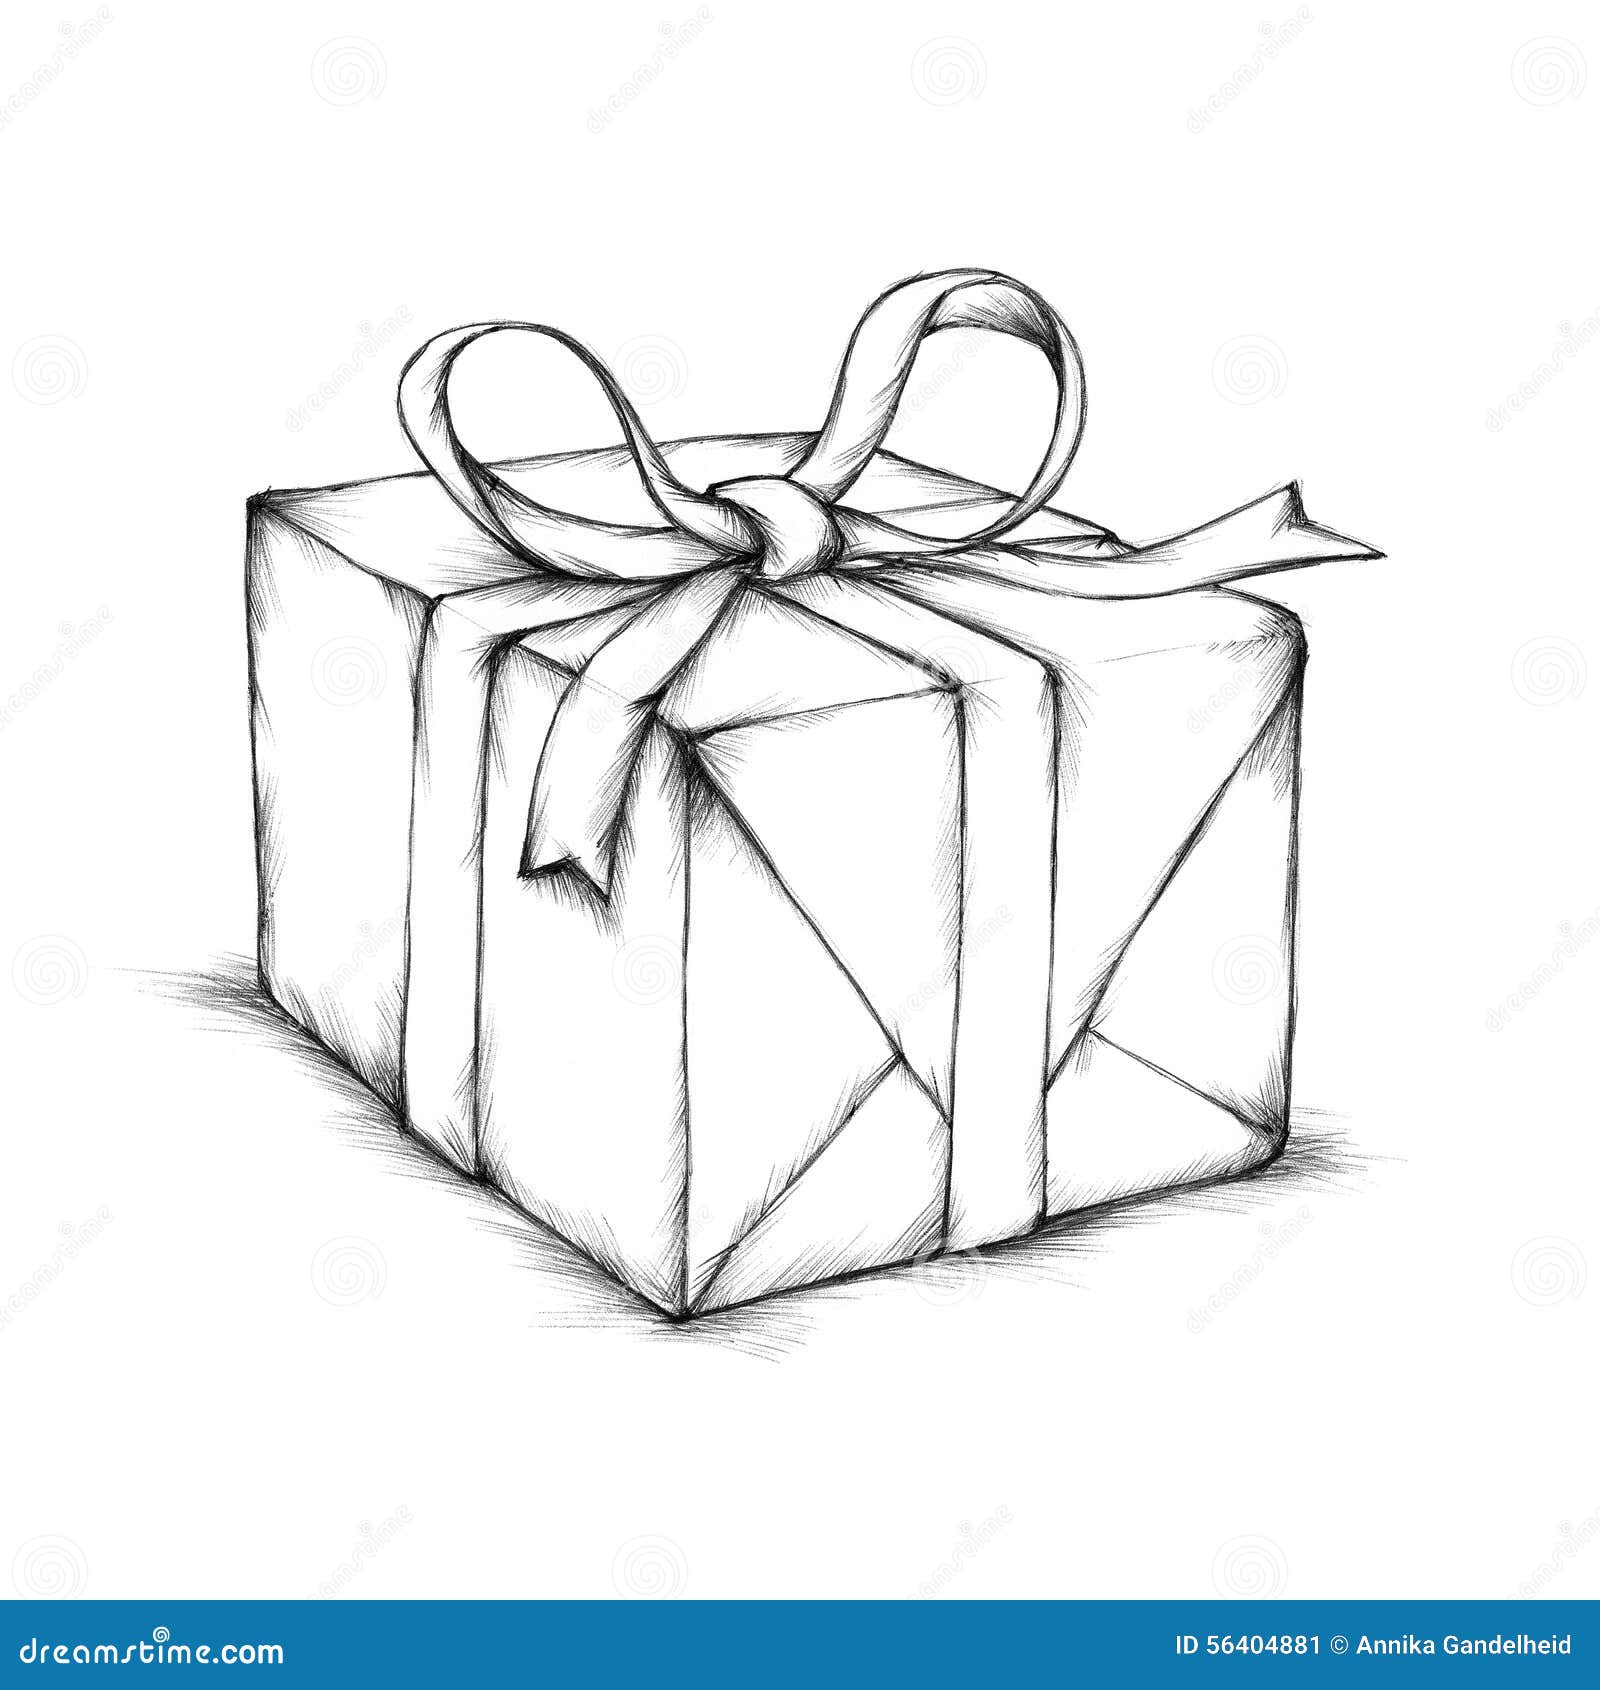 A small gift box stock illustration. Illustration of